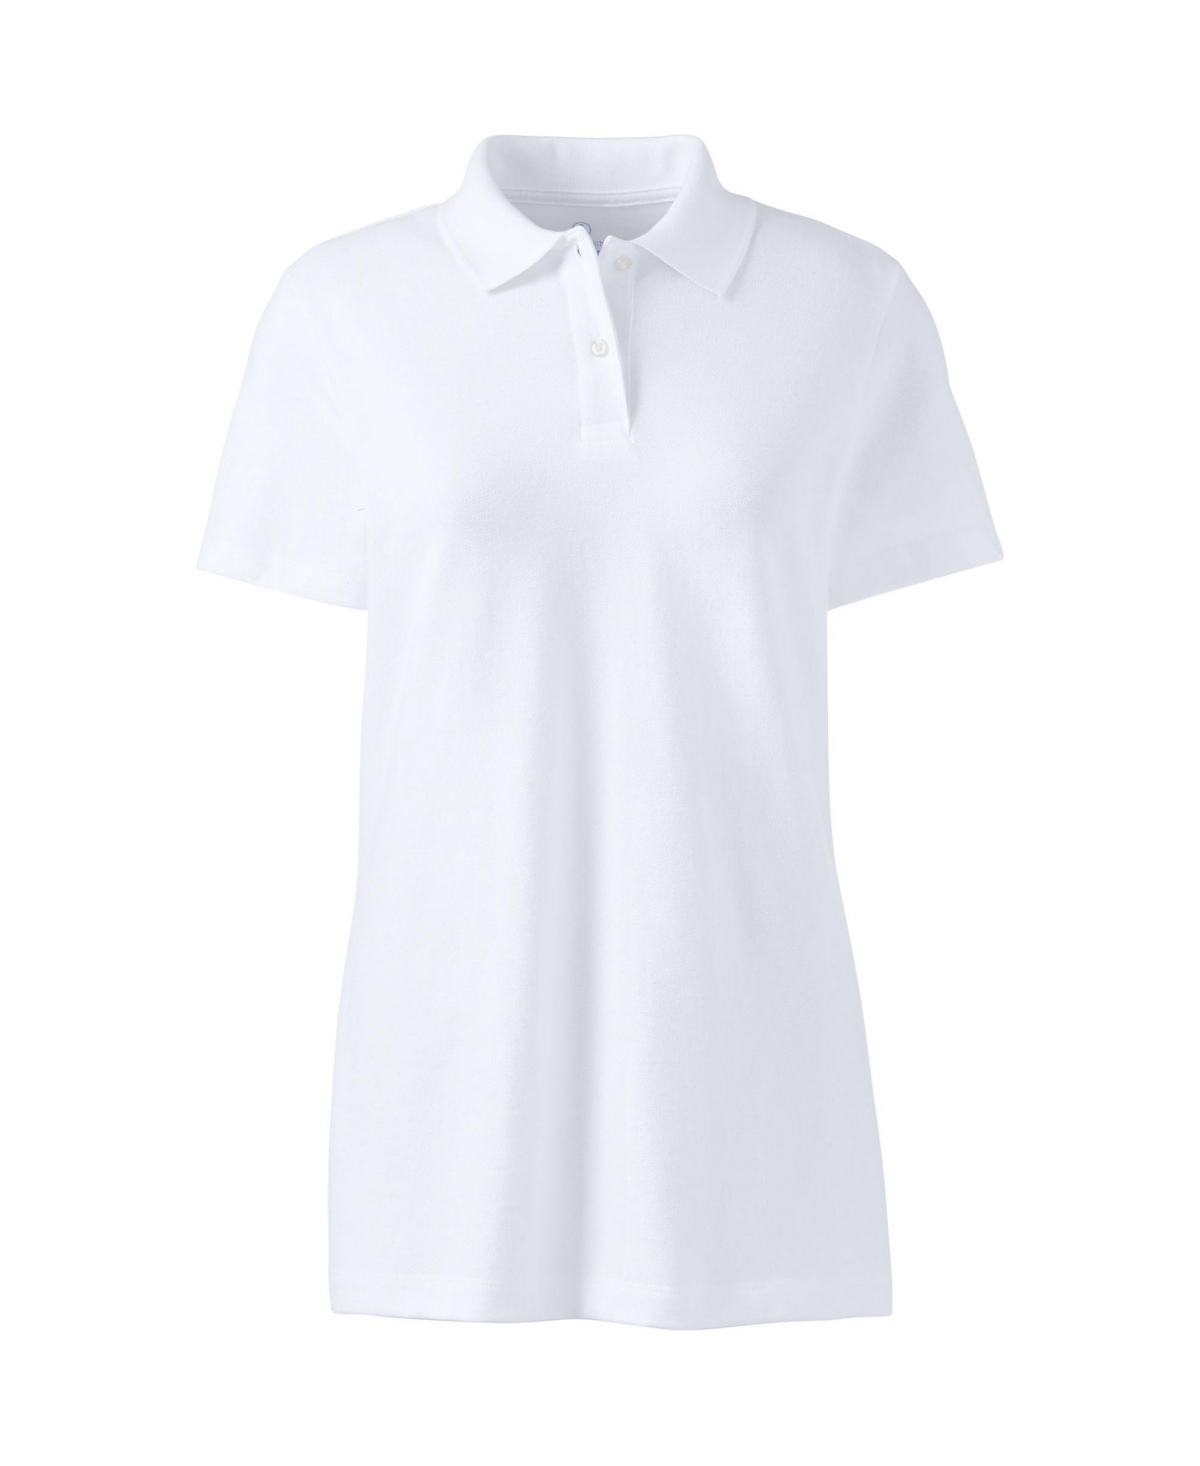 Plus Size Short Sleeve Basic Mesh Polo Shirt - Vibrant clover